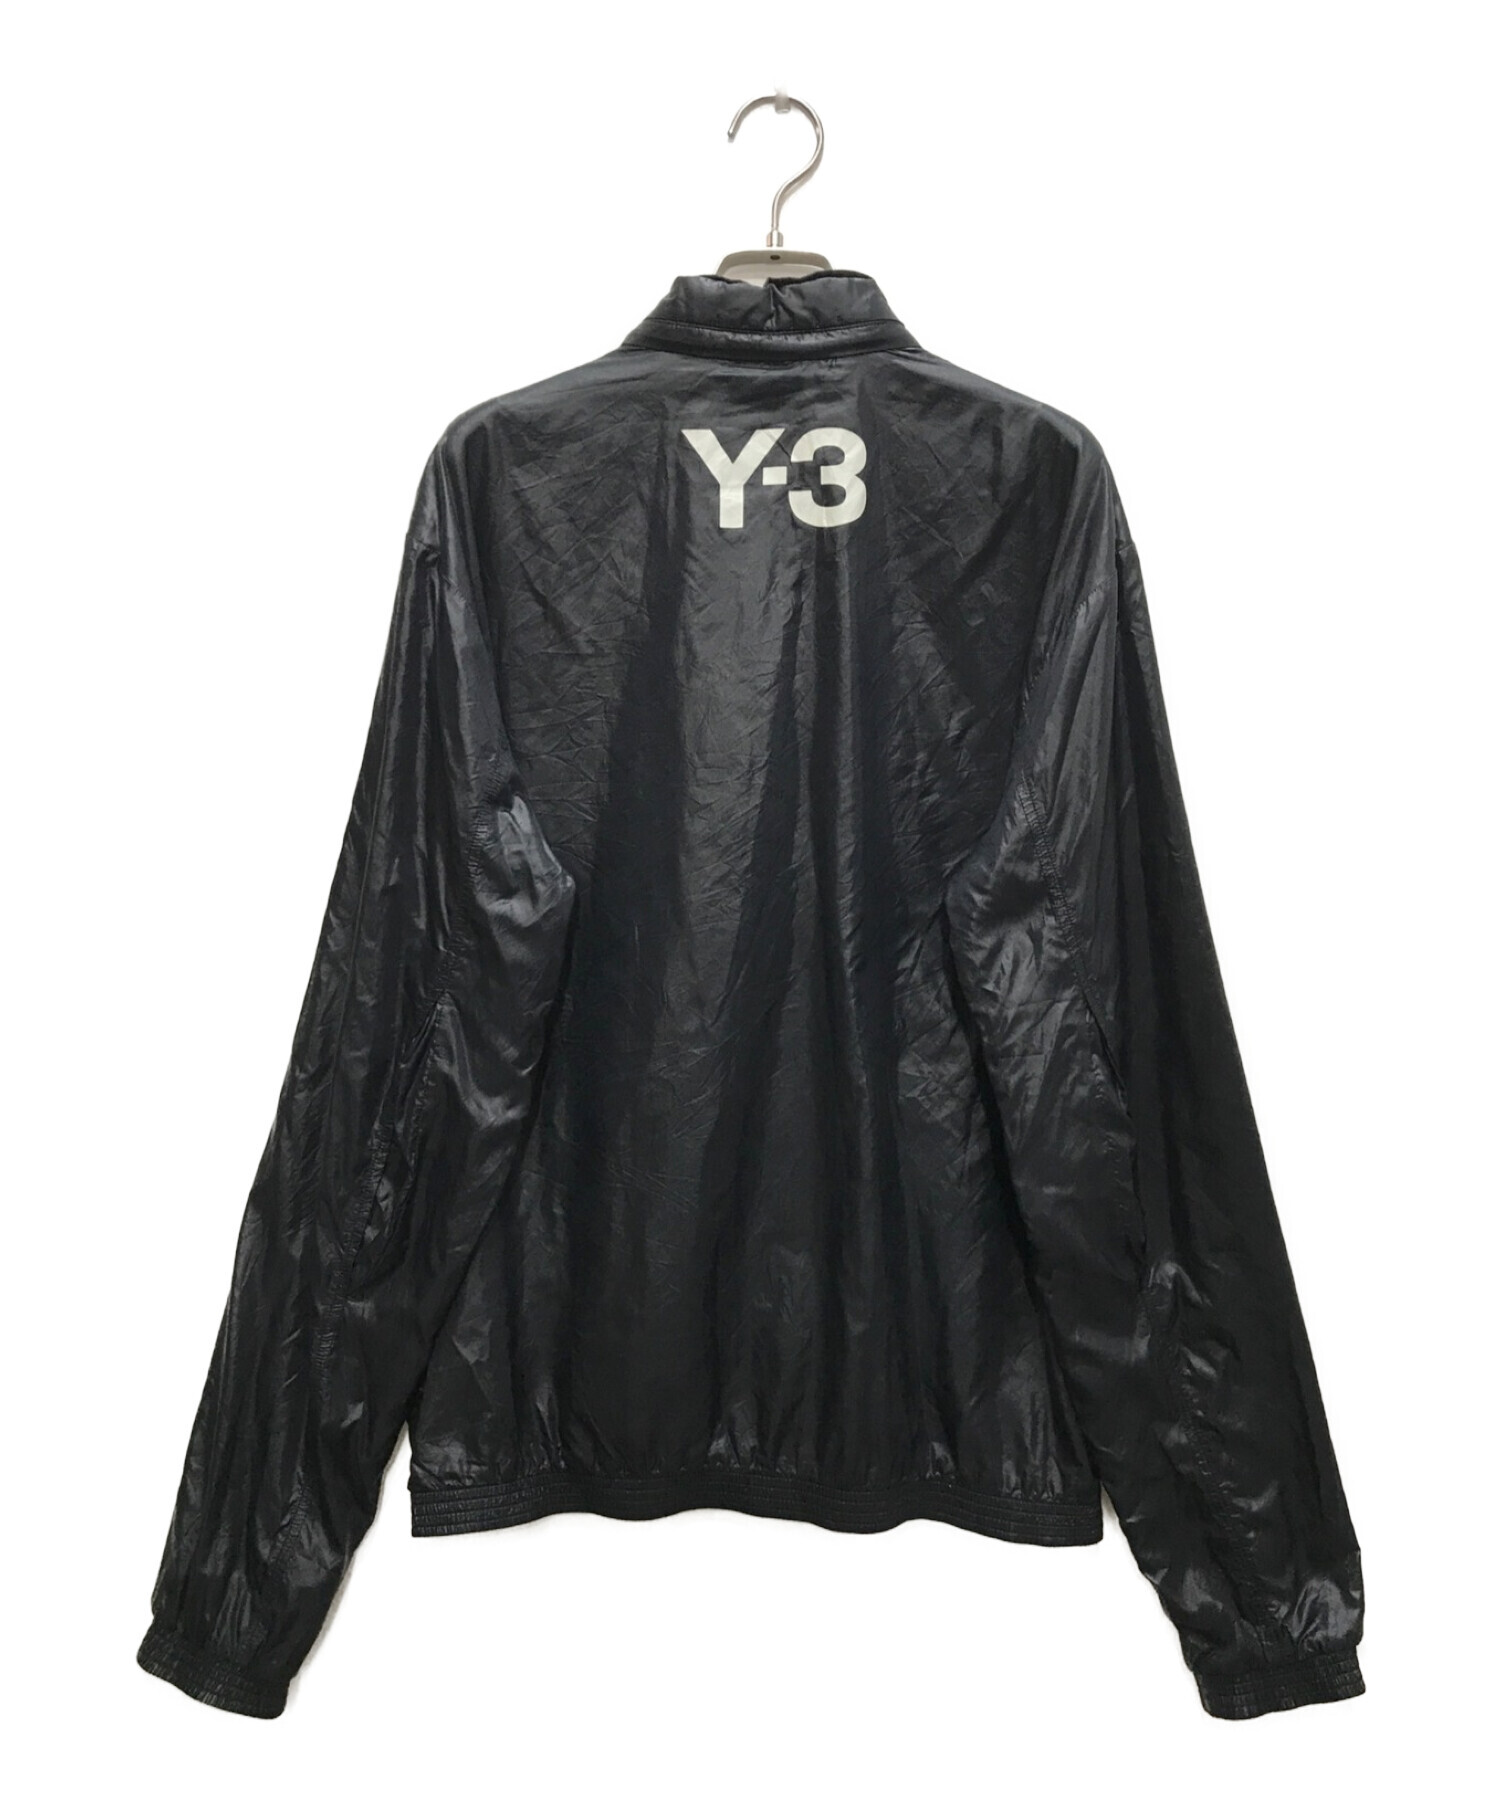 Y-3 (ワイスリー) ナイロンジャケット ブラック サイズ:S